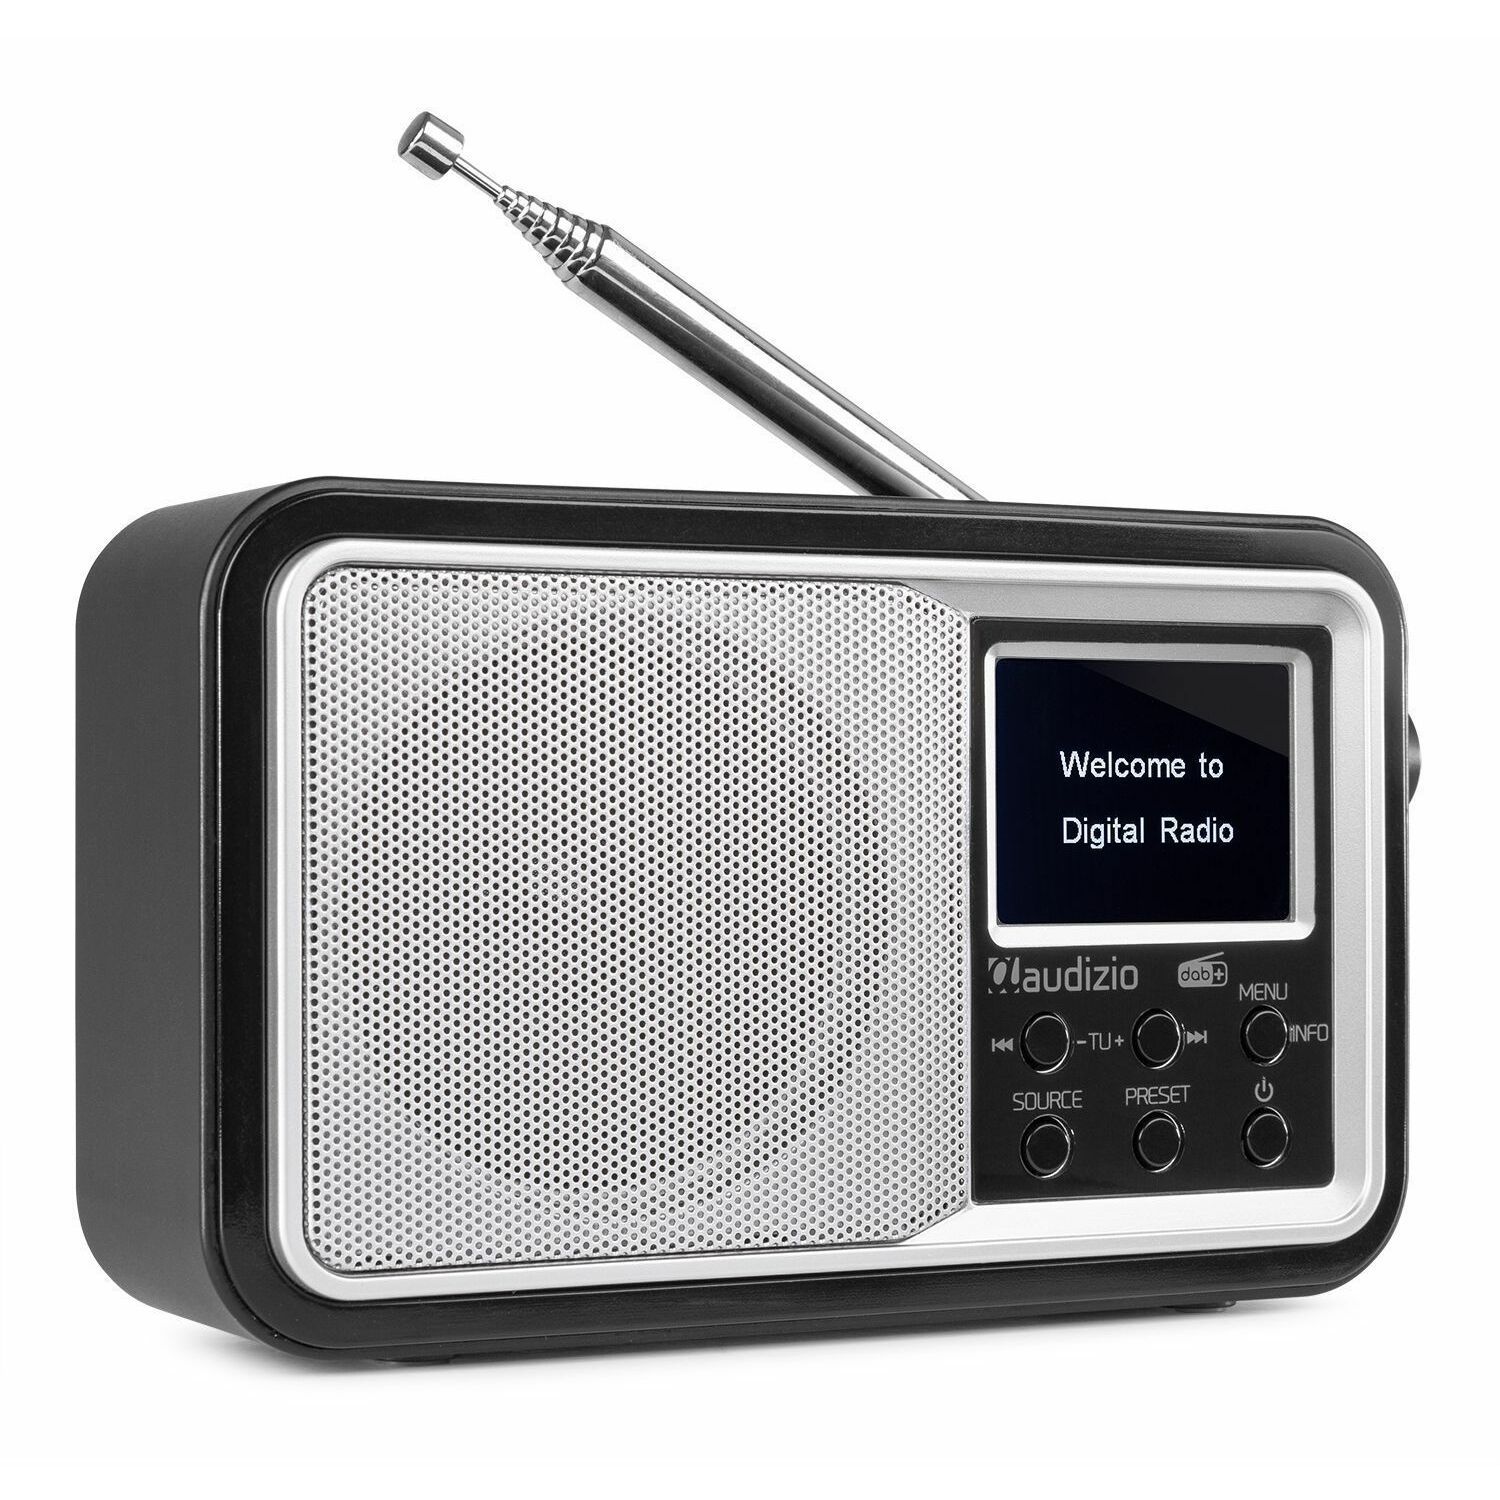 Specificiteit Open periodieke Audizio Parma draagbare DAB radio met Bluetooth en FM radio - Zilver kopen?